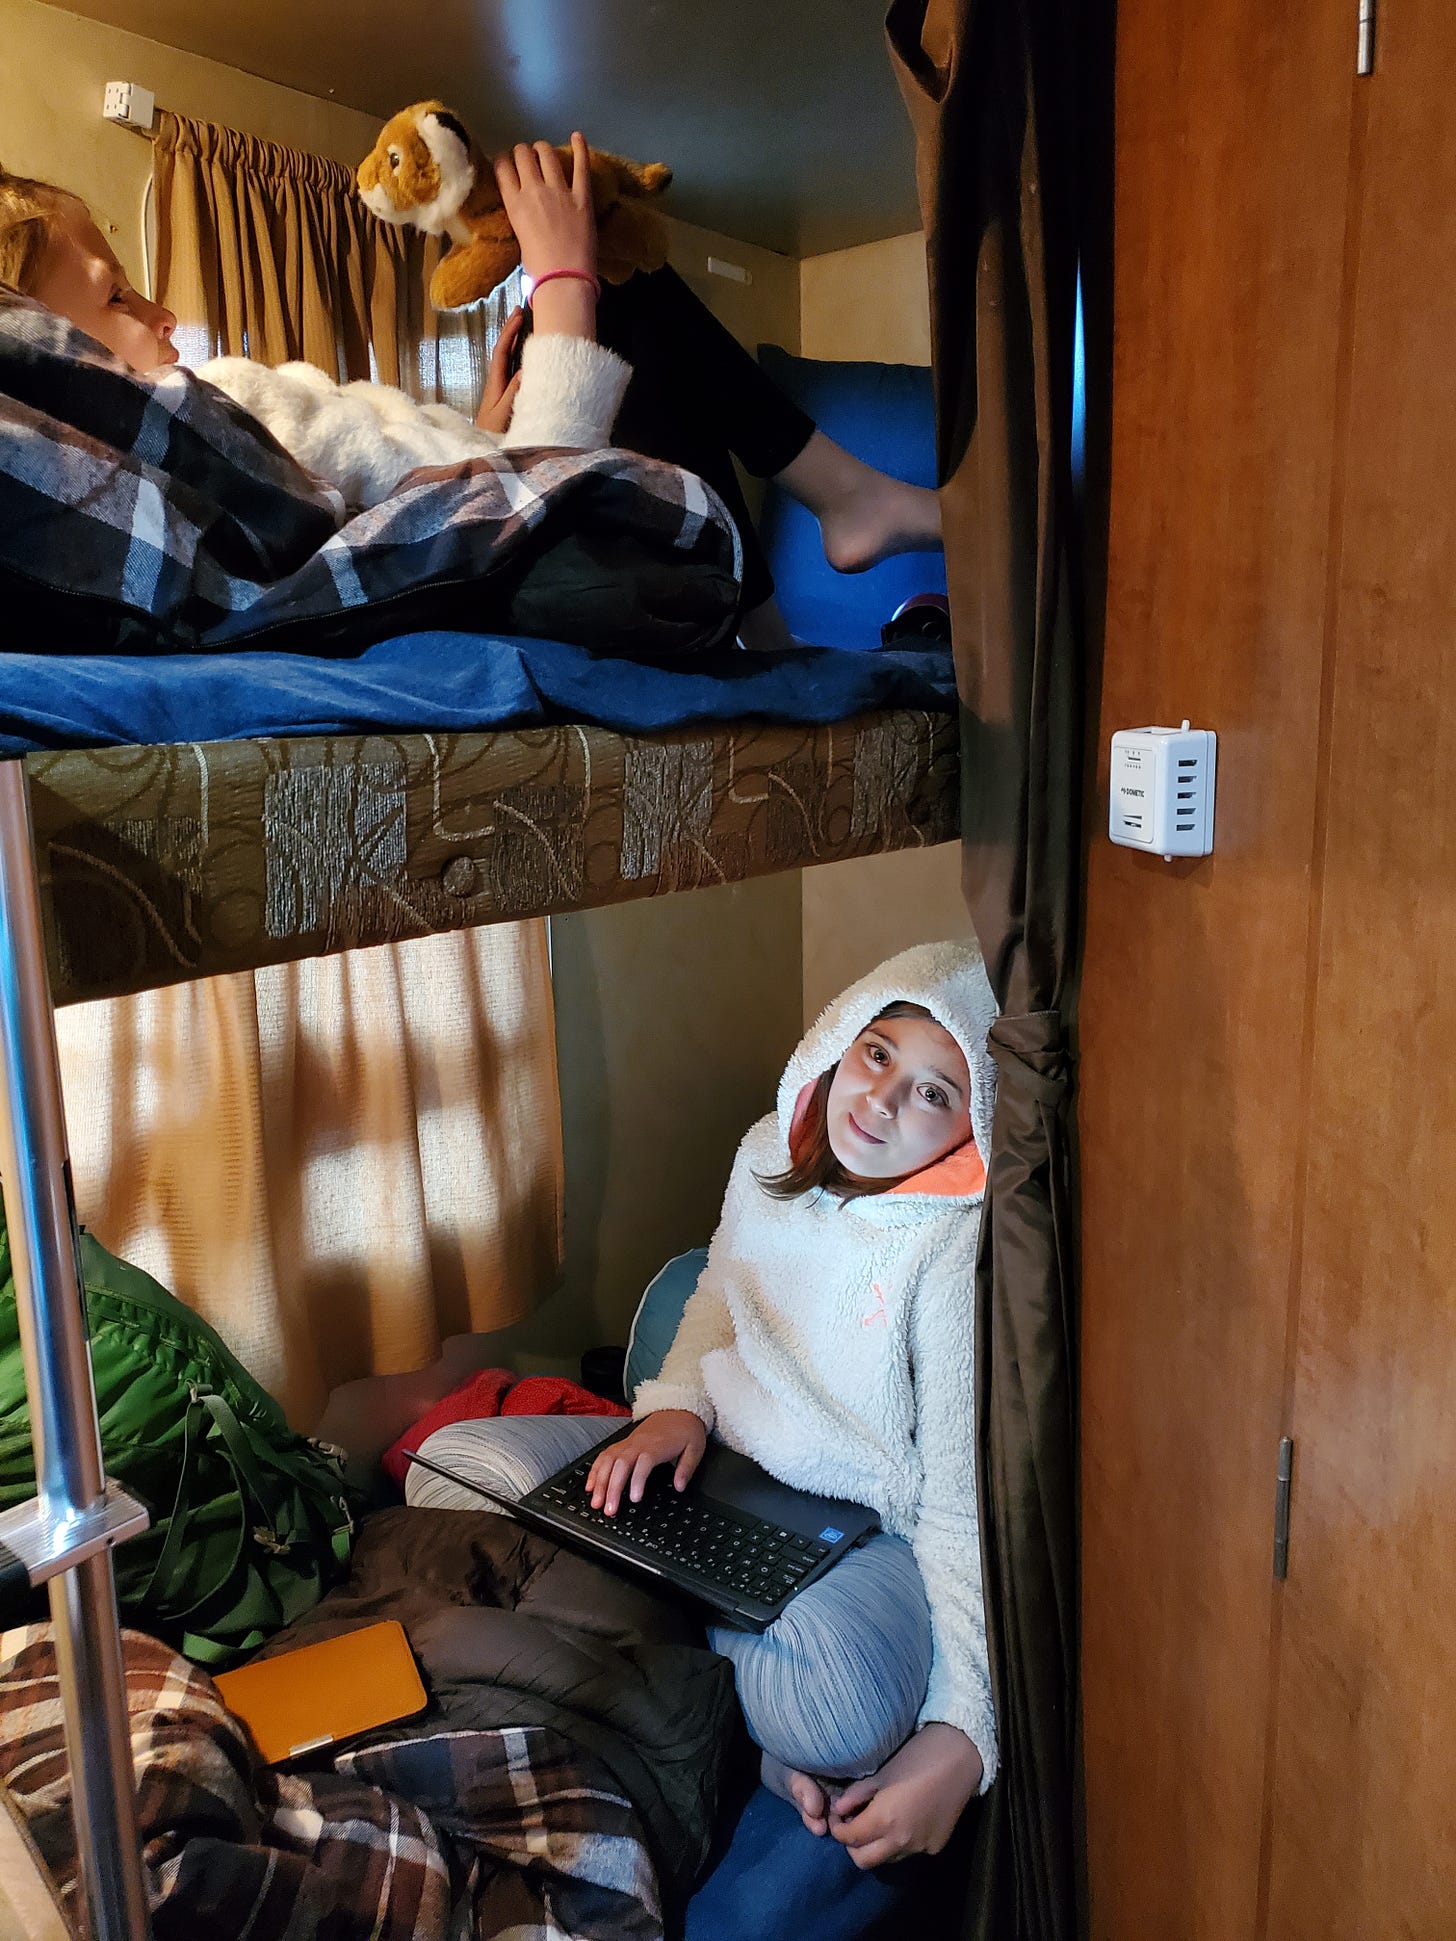 Interior shot of the travel trailer. One girl in the upper bunk and one girl in the lower bunk bed.